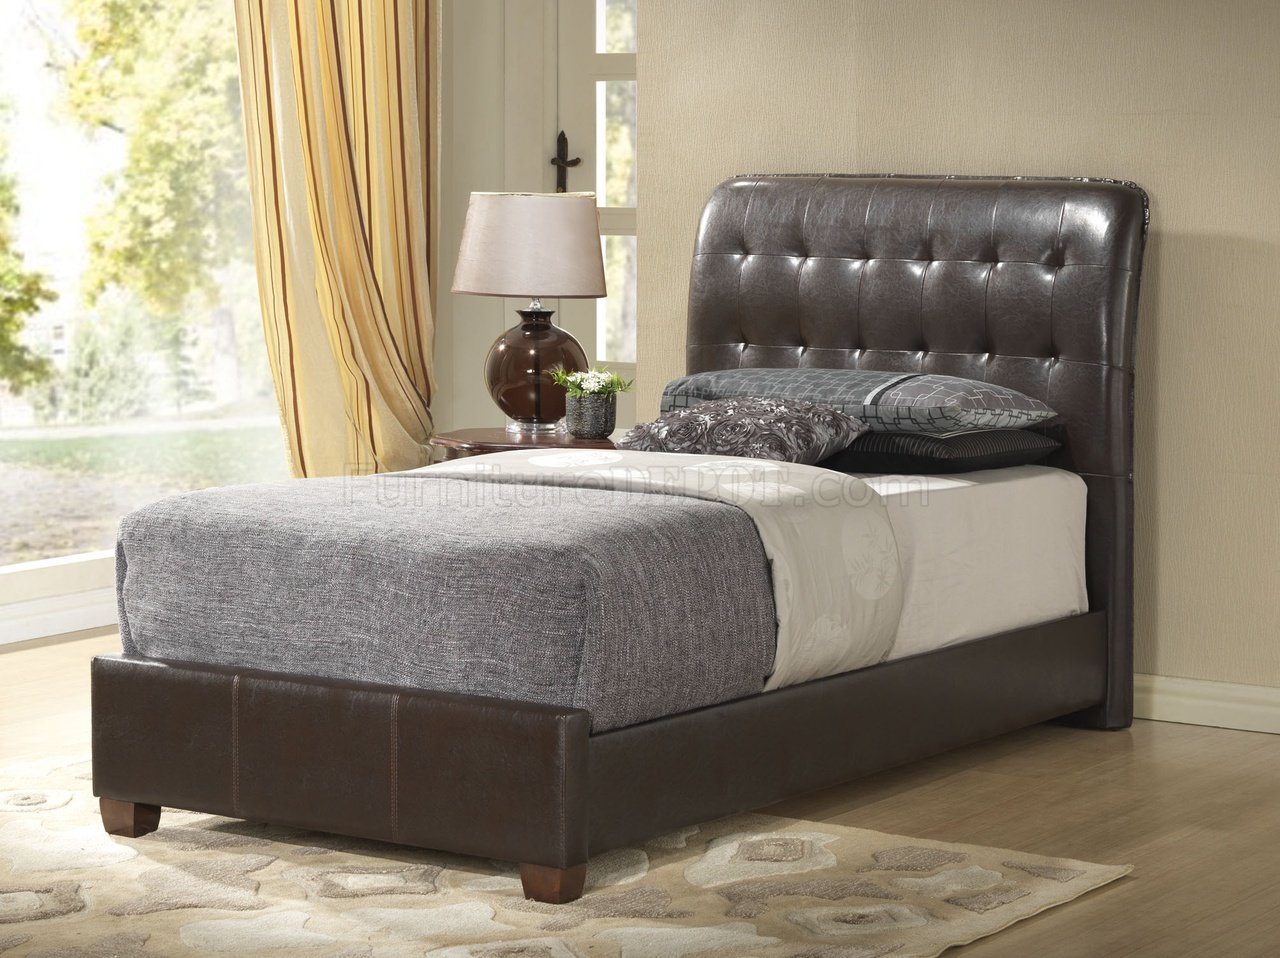 G2595 Upholstered Bed in Dark Brown 